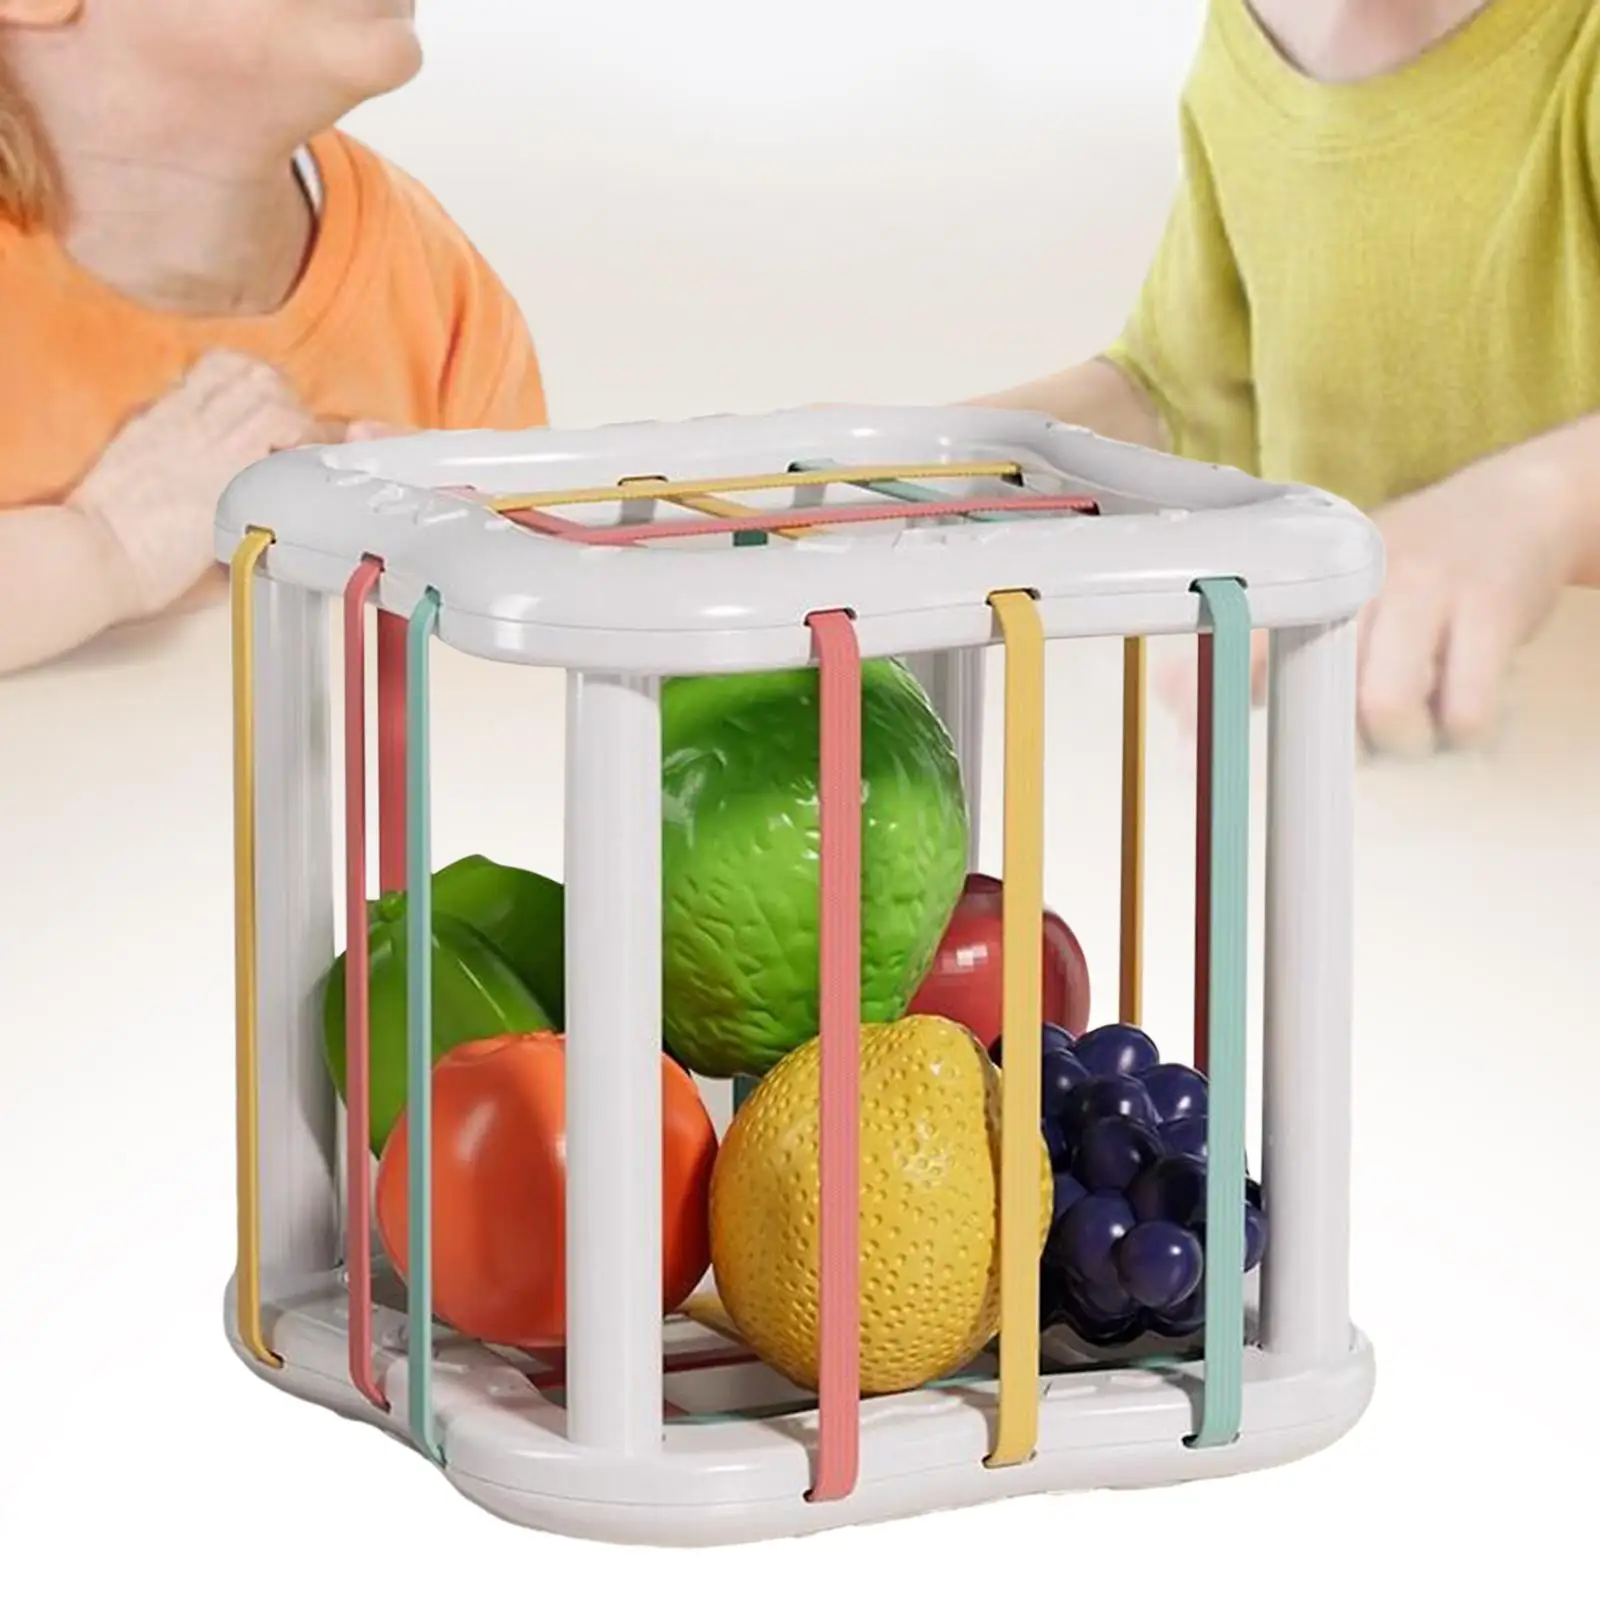 Baby Shape Sorter Toy Montessori Fine Motor Skills Cube Sensory Sorting Baby Toy for Kids Children Girls Boys Age 1 2 3 Gifts